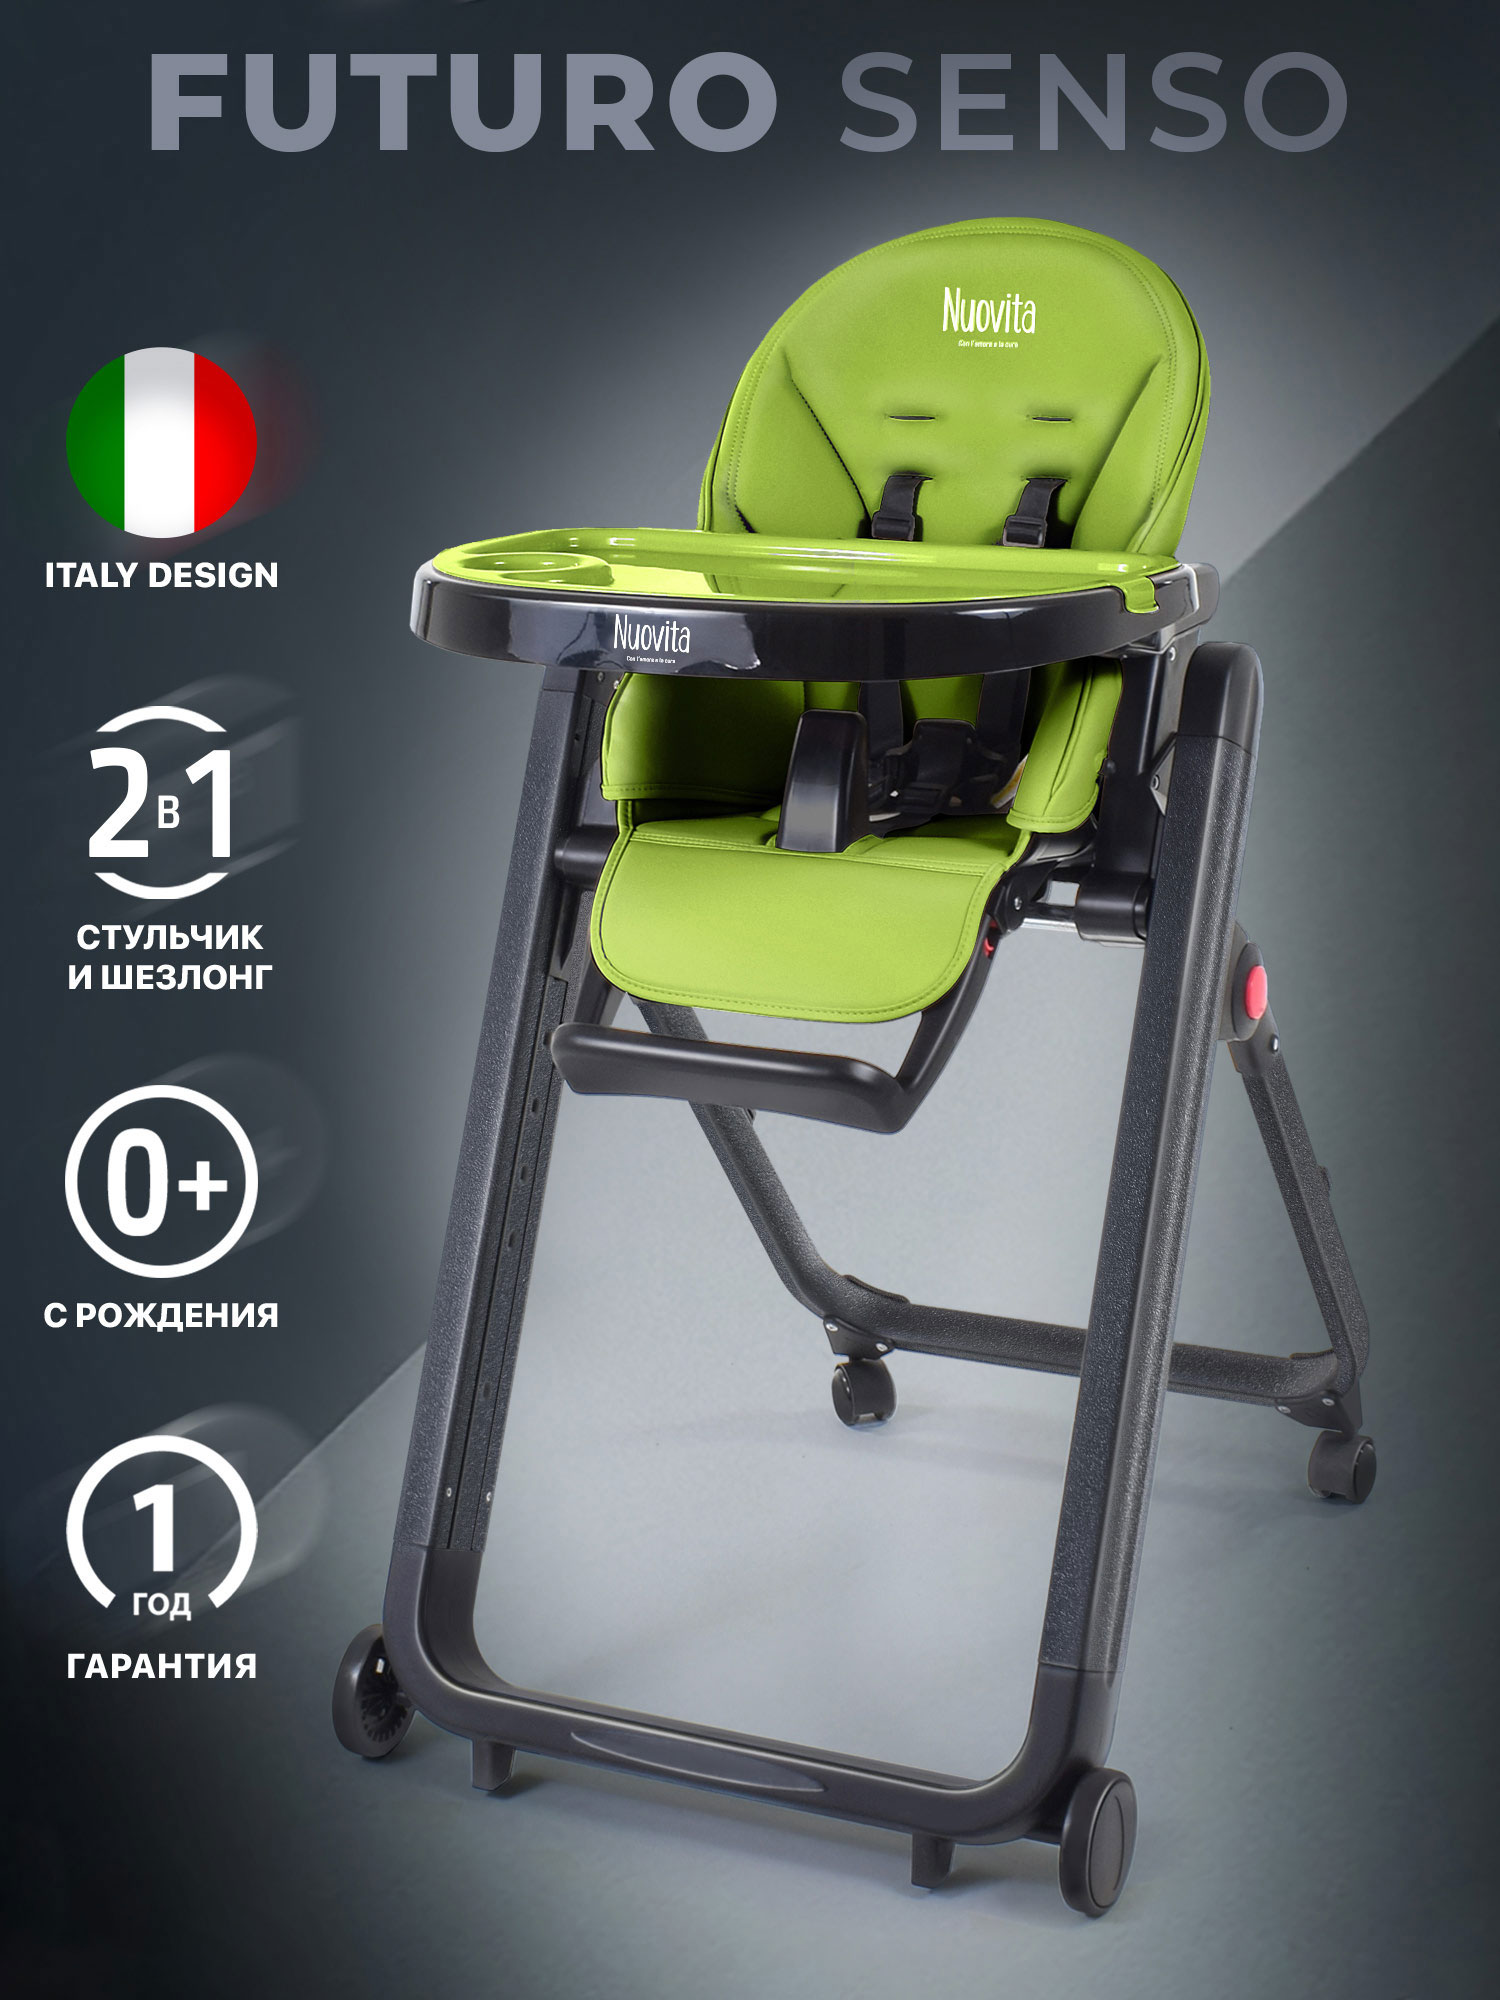 Стульчик для кормления Nuovita Futuro Senso Nero (Verde/Зеленый) стульчик для кормления nuovita futuro nero cremisi малиновый